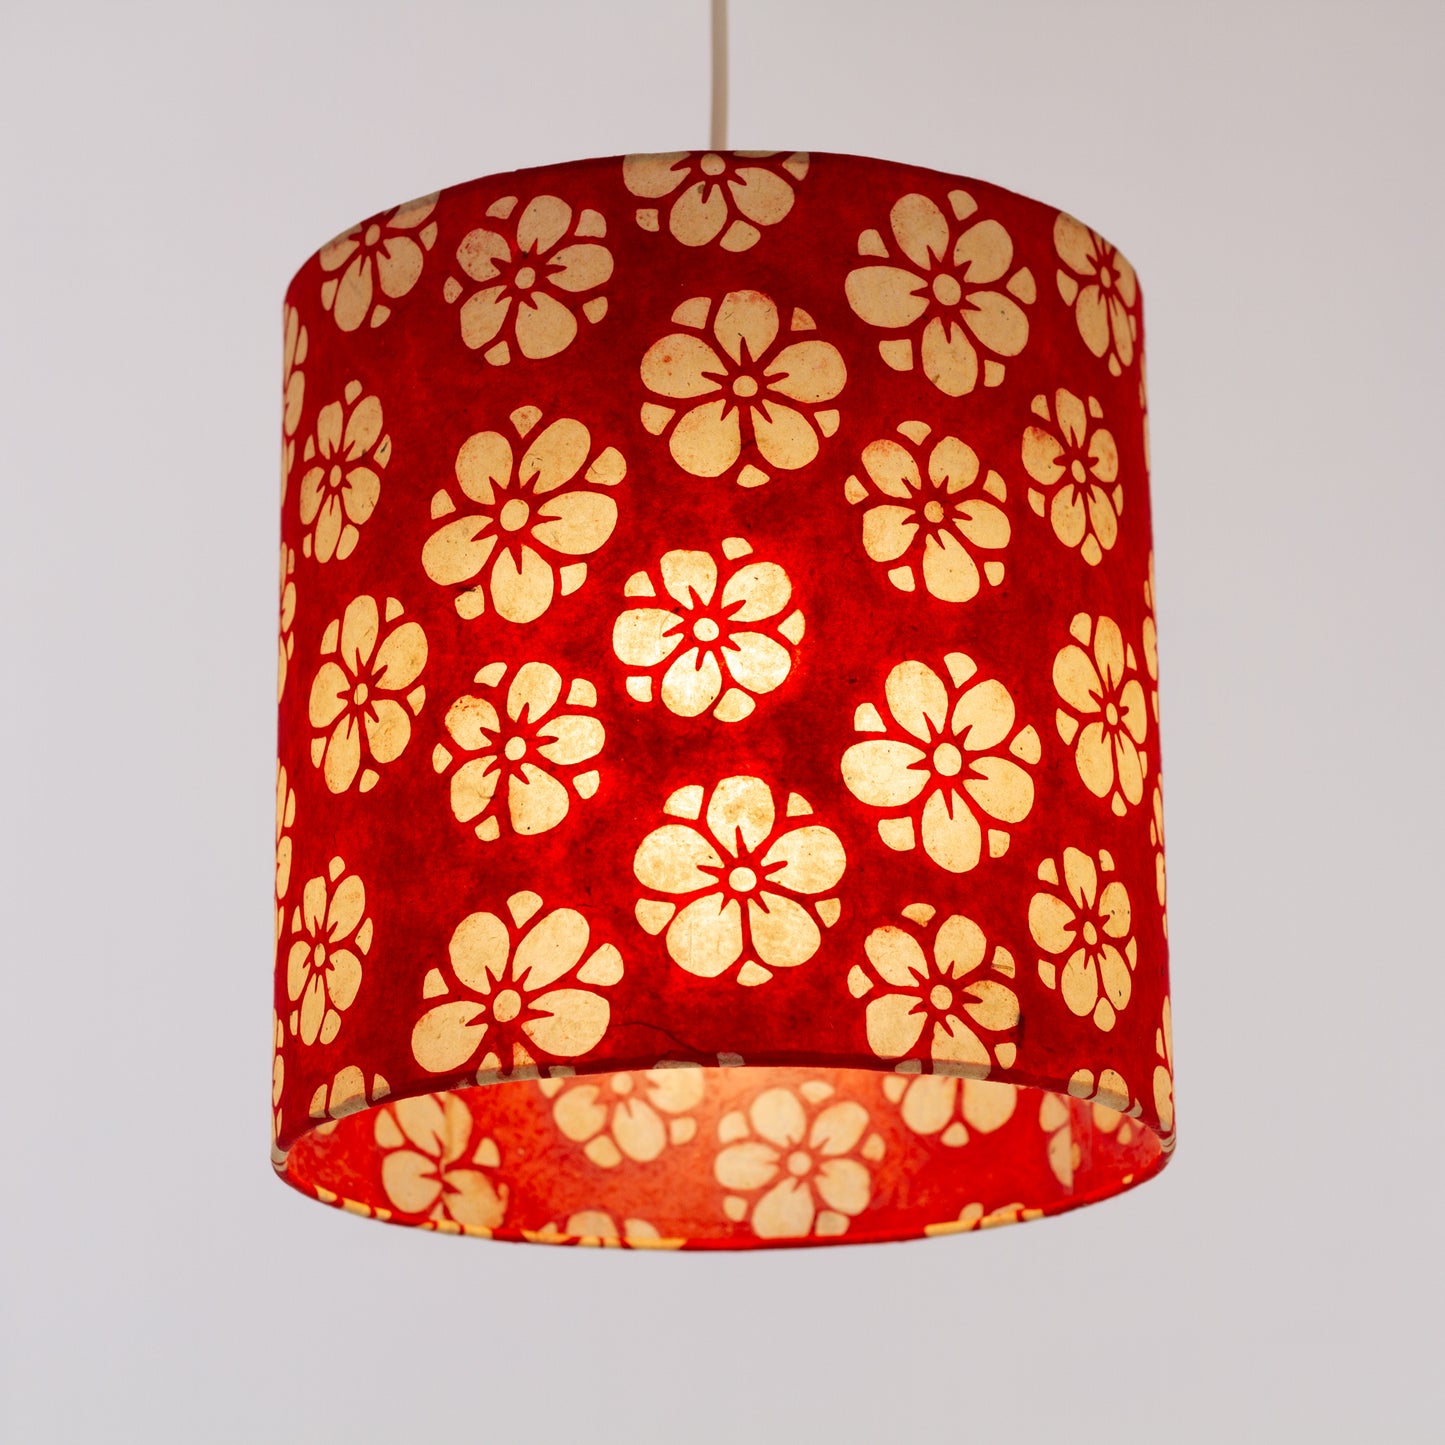 Drum Lamp Shade - P76 - Batik Star Flower Red, 25cm x 25cm